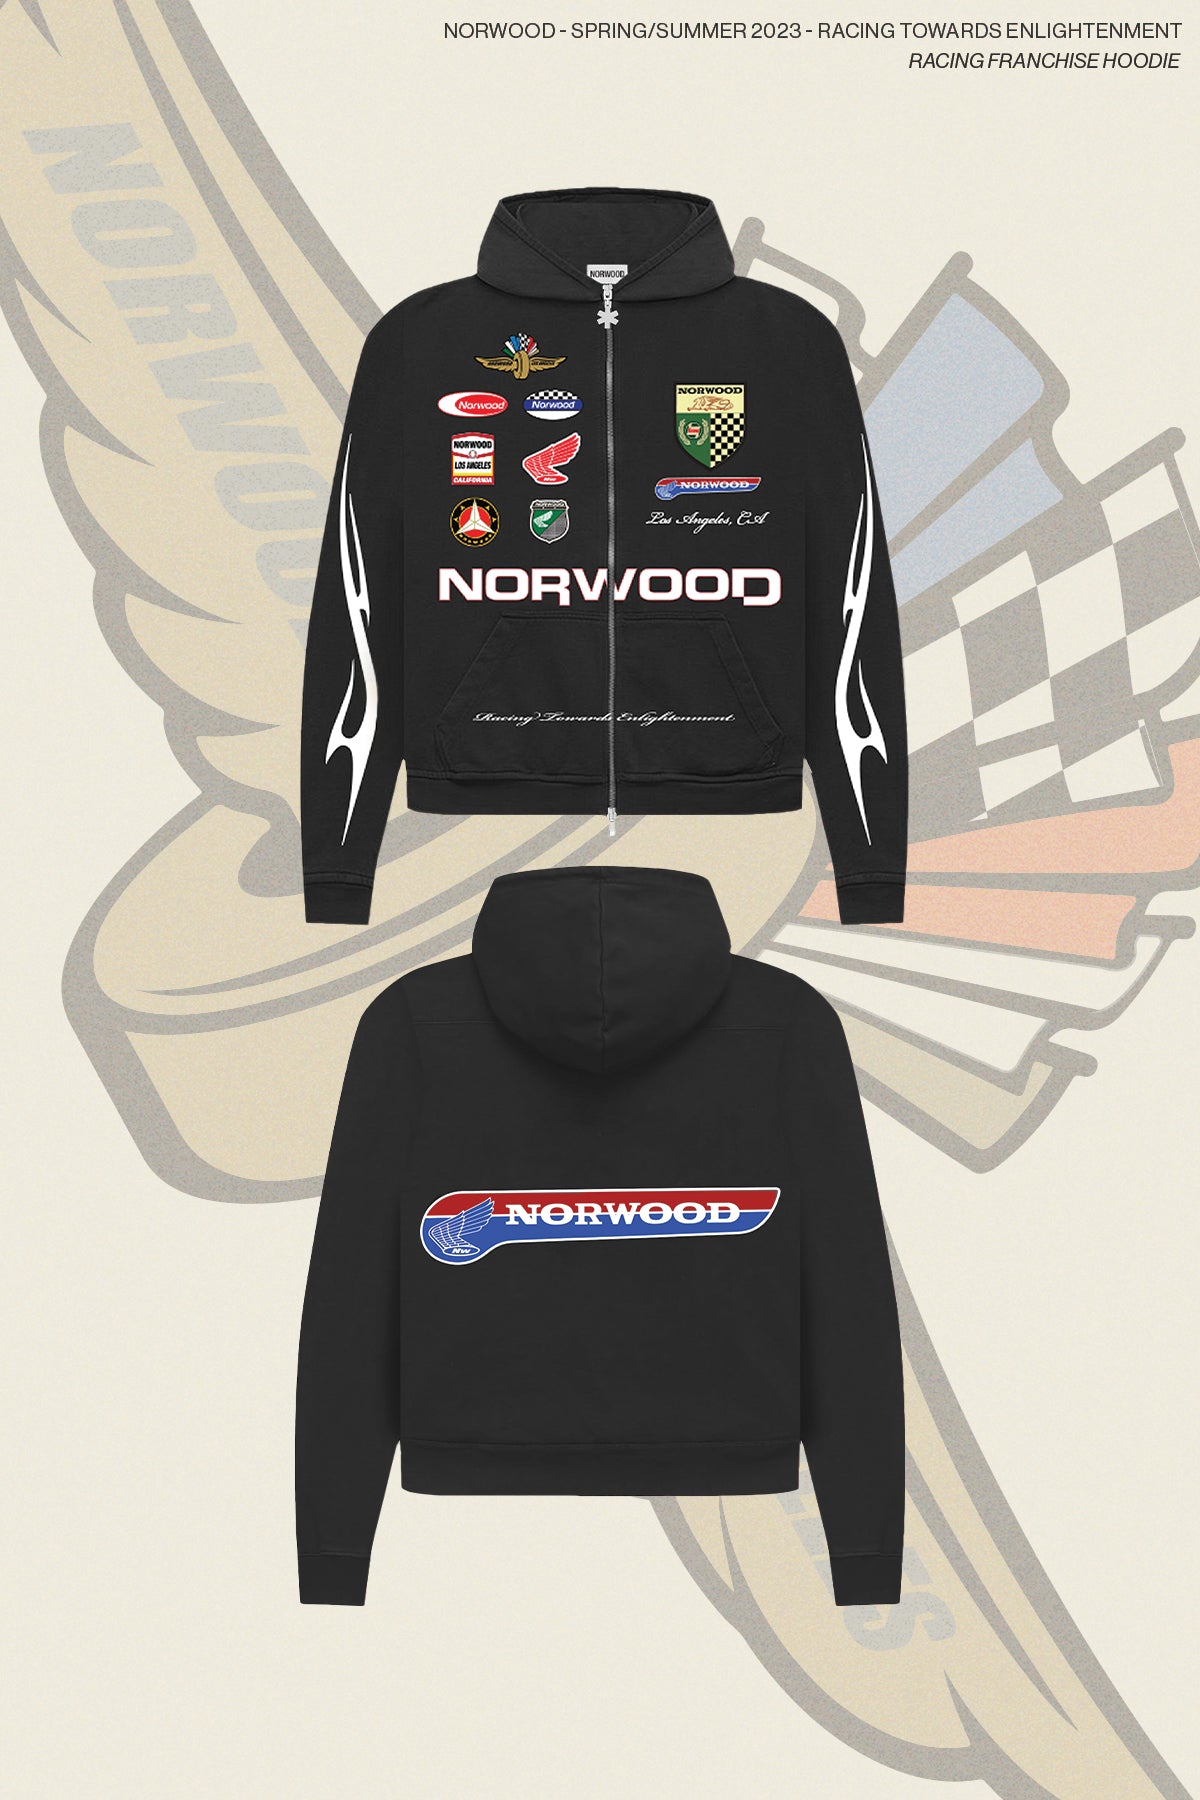 Norwood-Racing-Lookbook-V-1.jpg__PID:3c0eab03-97c3-428c-8359-7f1660c601df